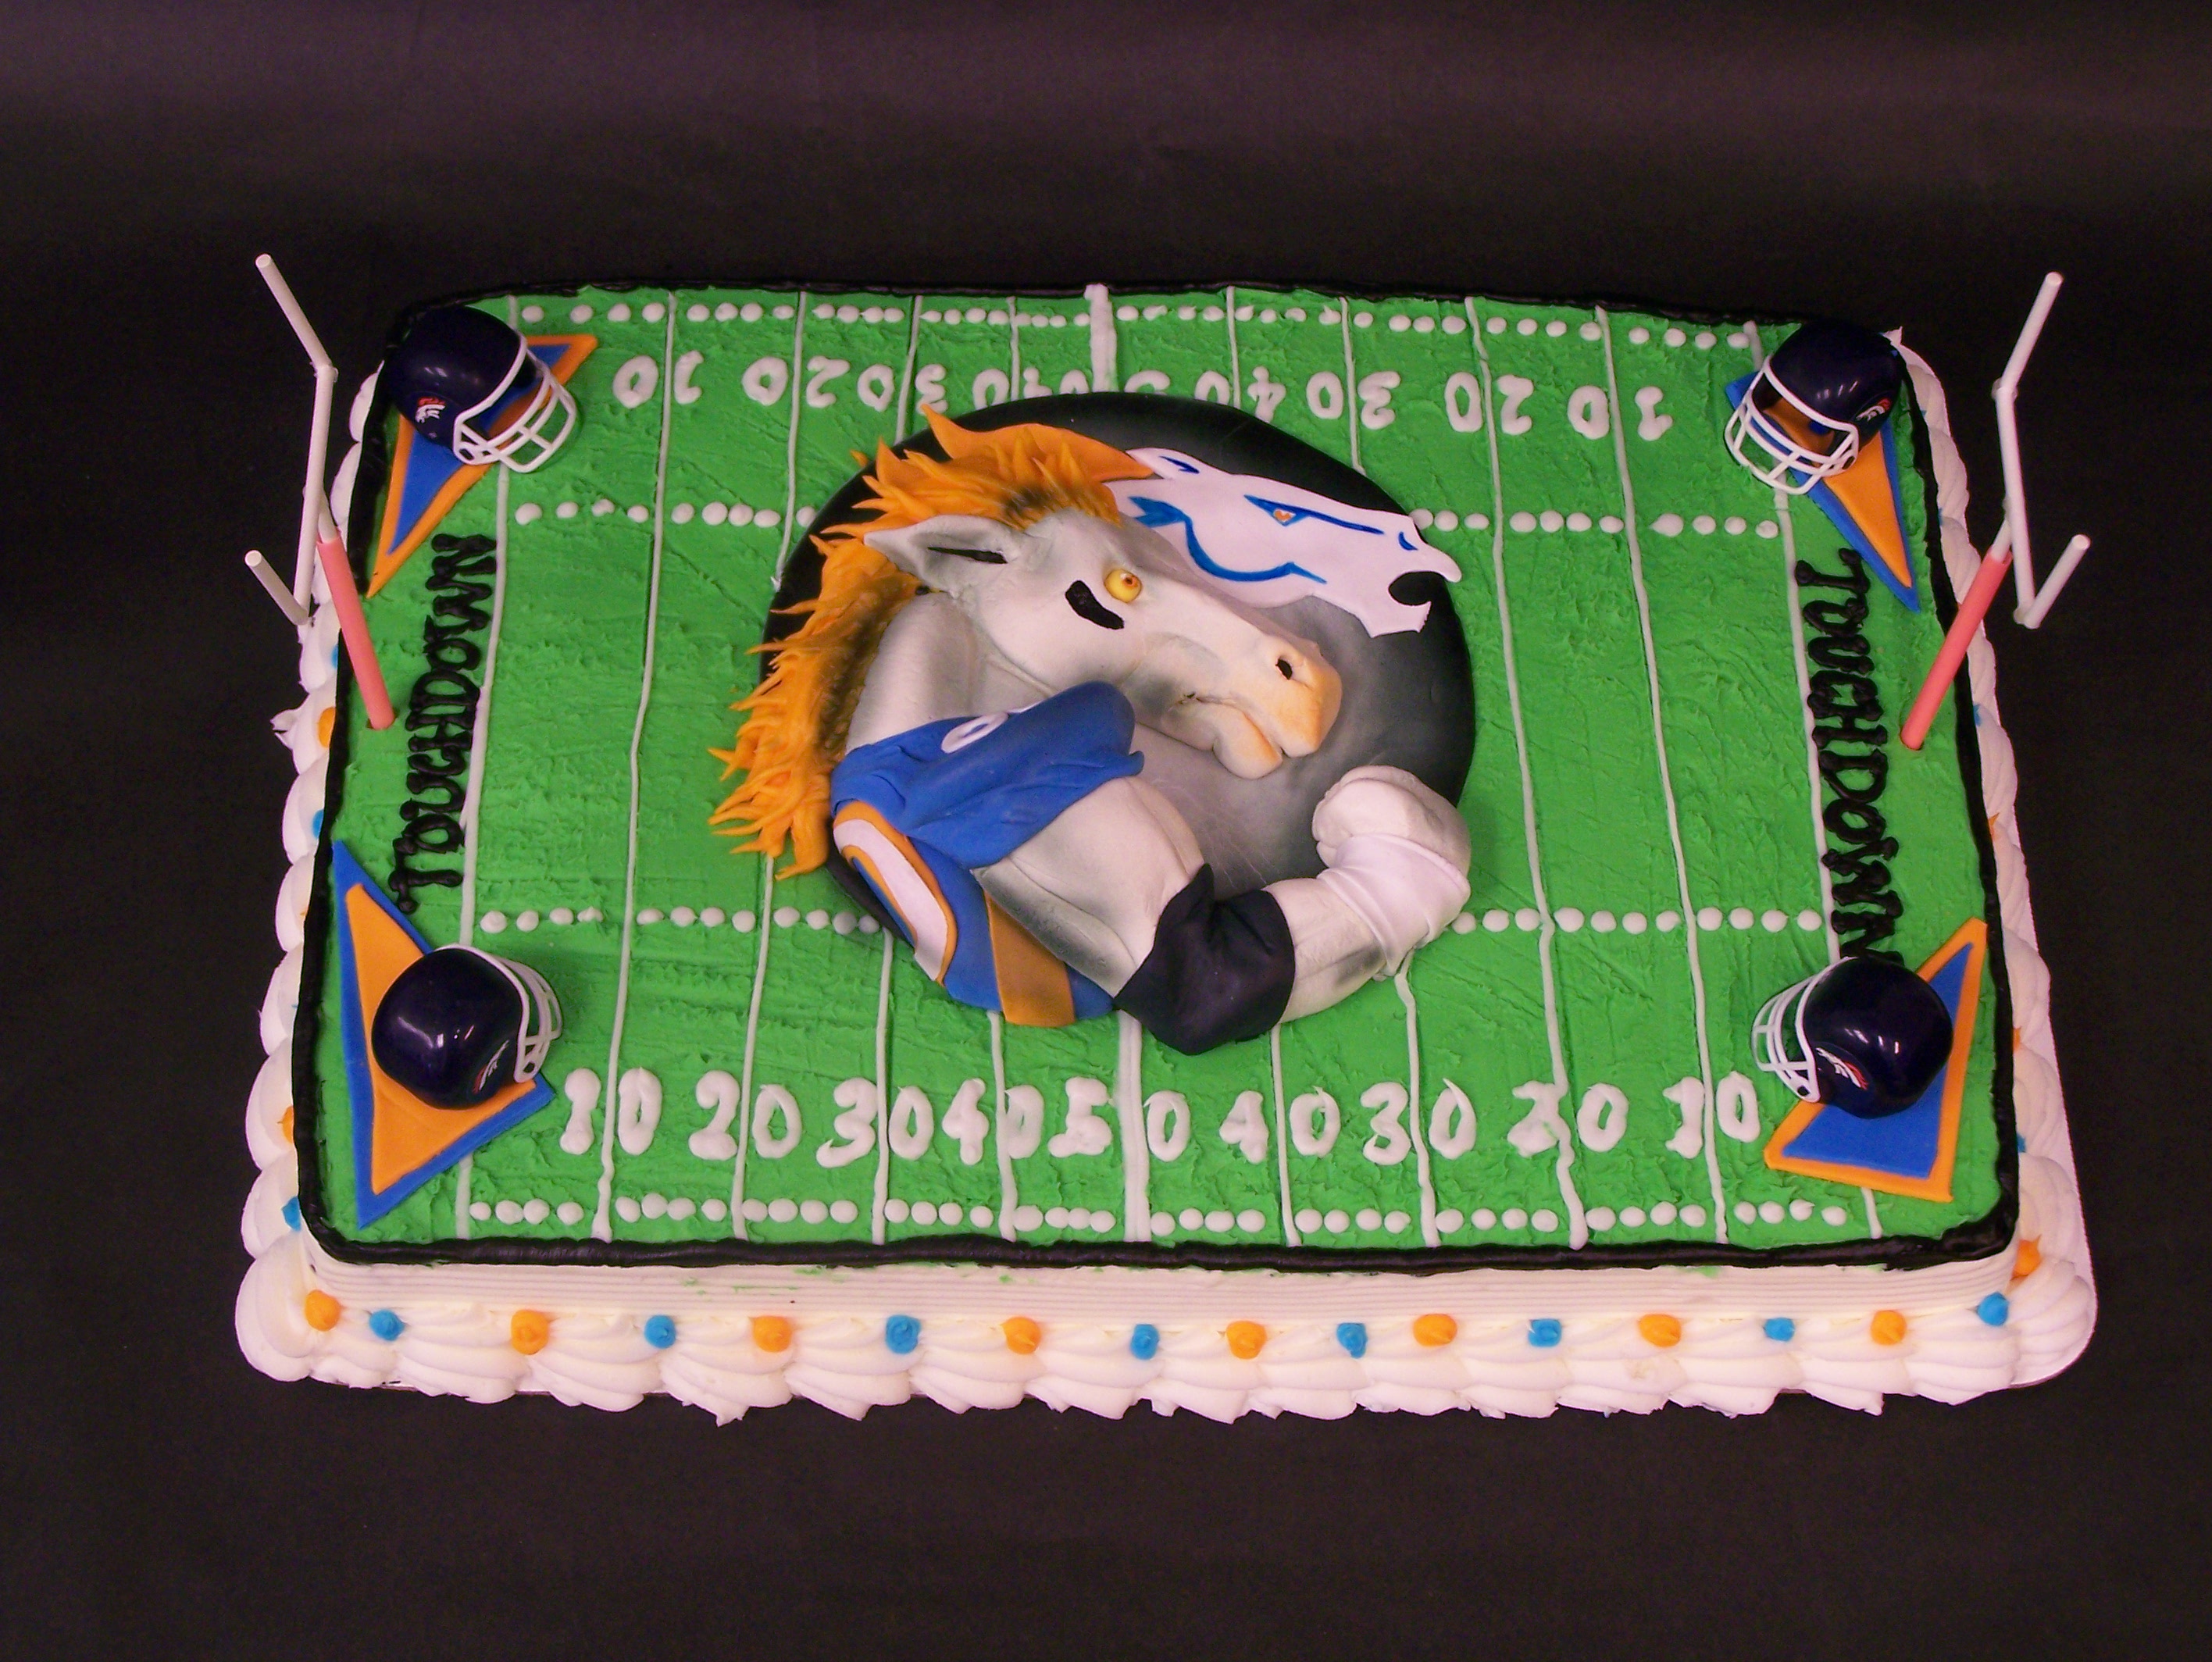 ChocaL8kiss - Broncos birthday cake! #chocaL8kiss #customcake #birthdaycake  #broncos #sports | Facebook